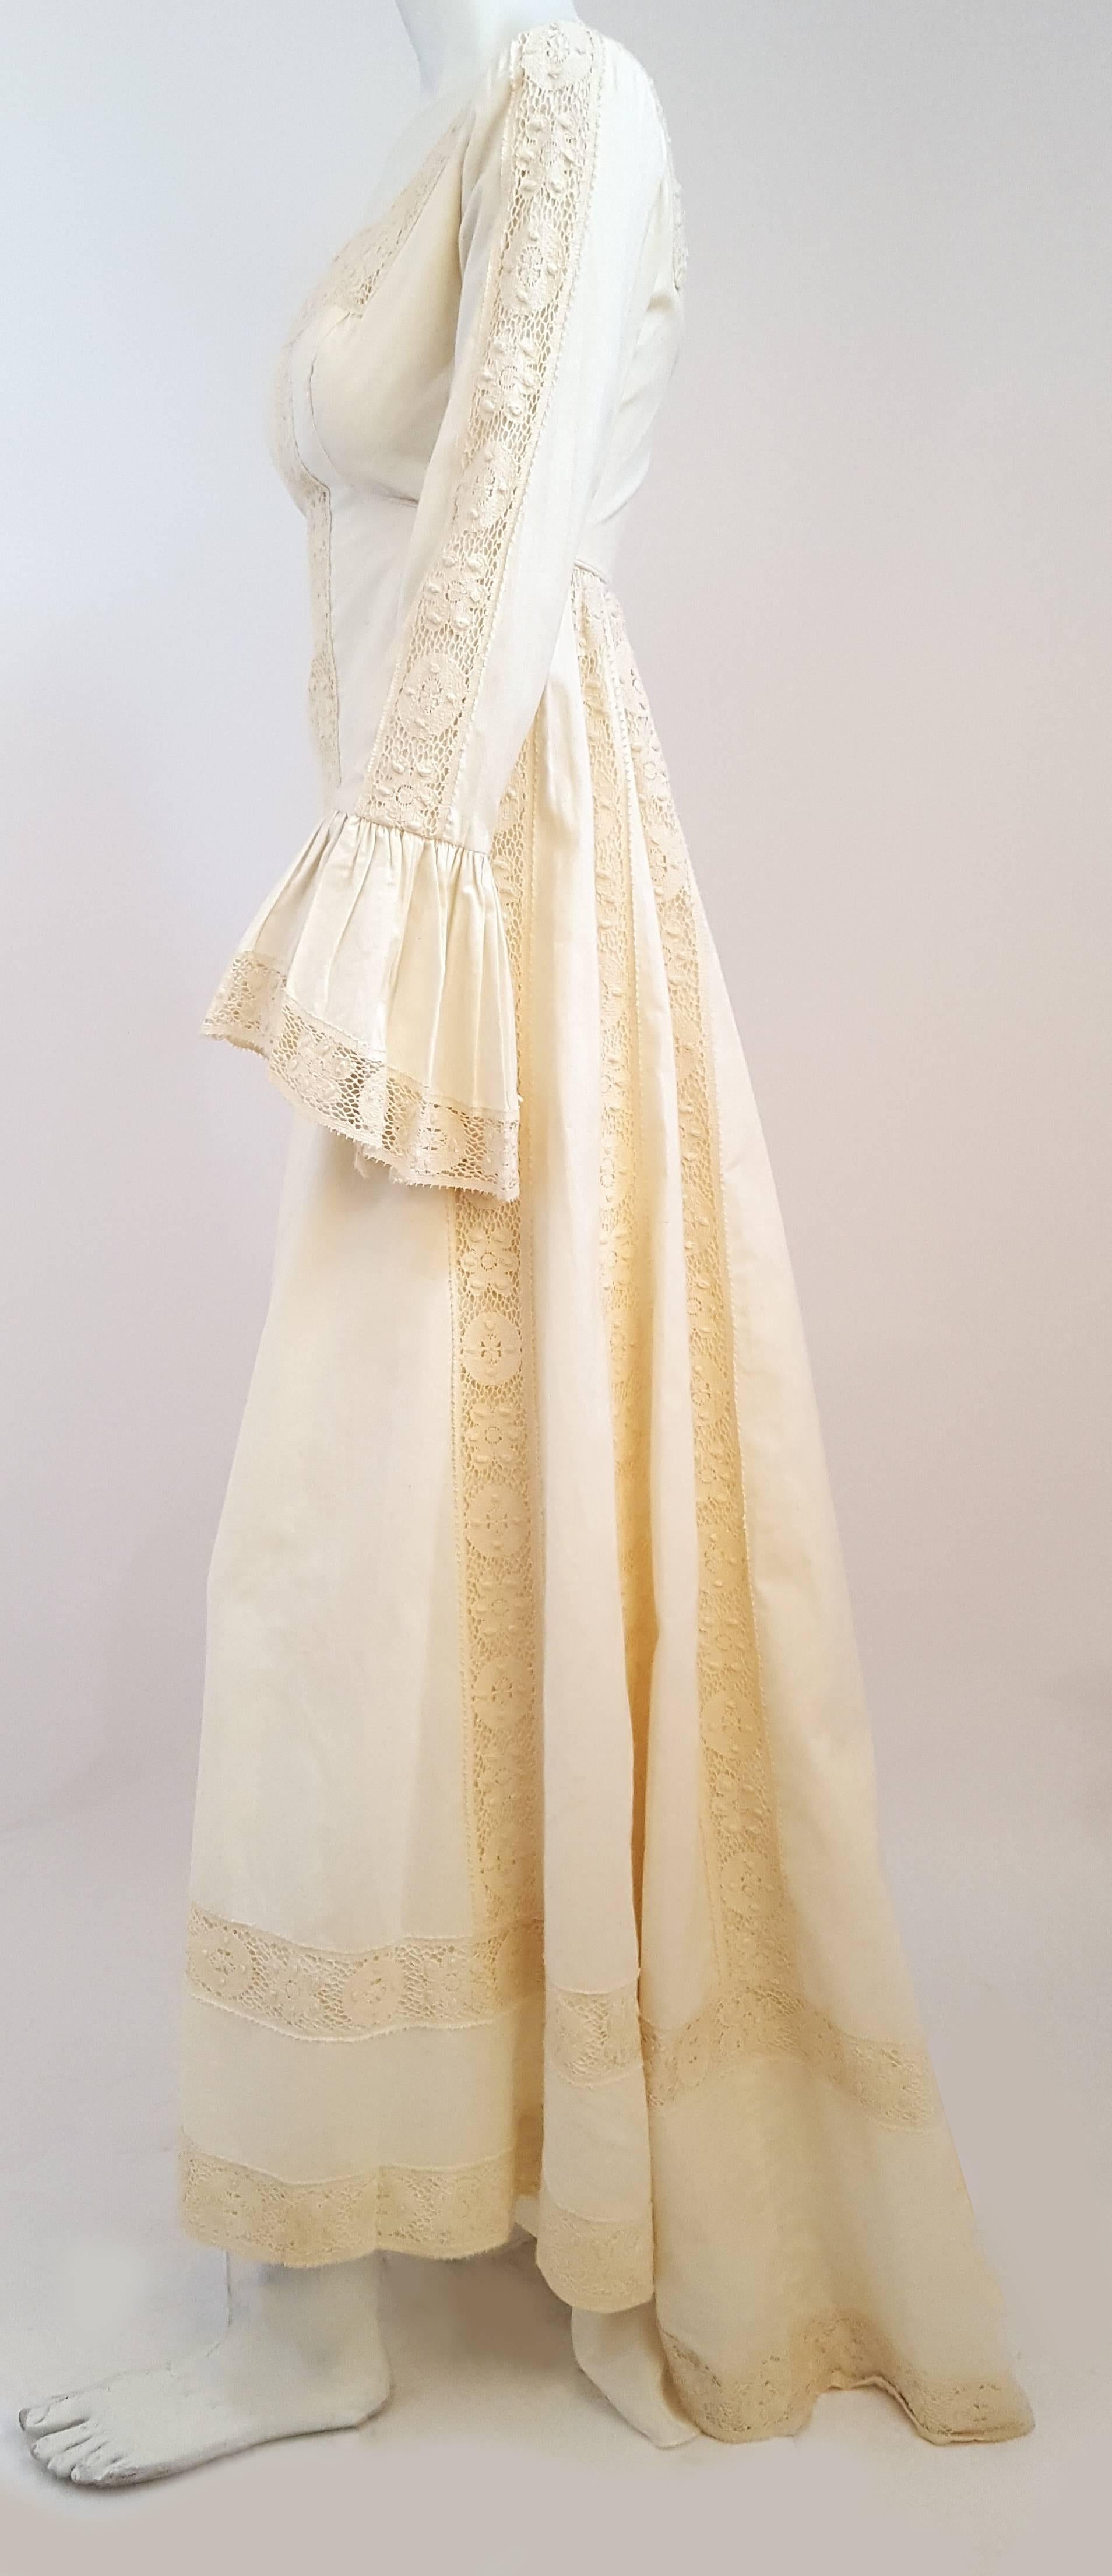 70s Emma Domb Medieval Style Cotton Wedding Dress w/ Train. Cotton trim detail. Back zip closure. 13